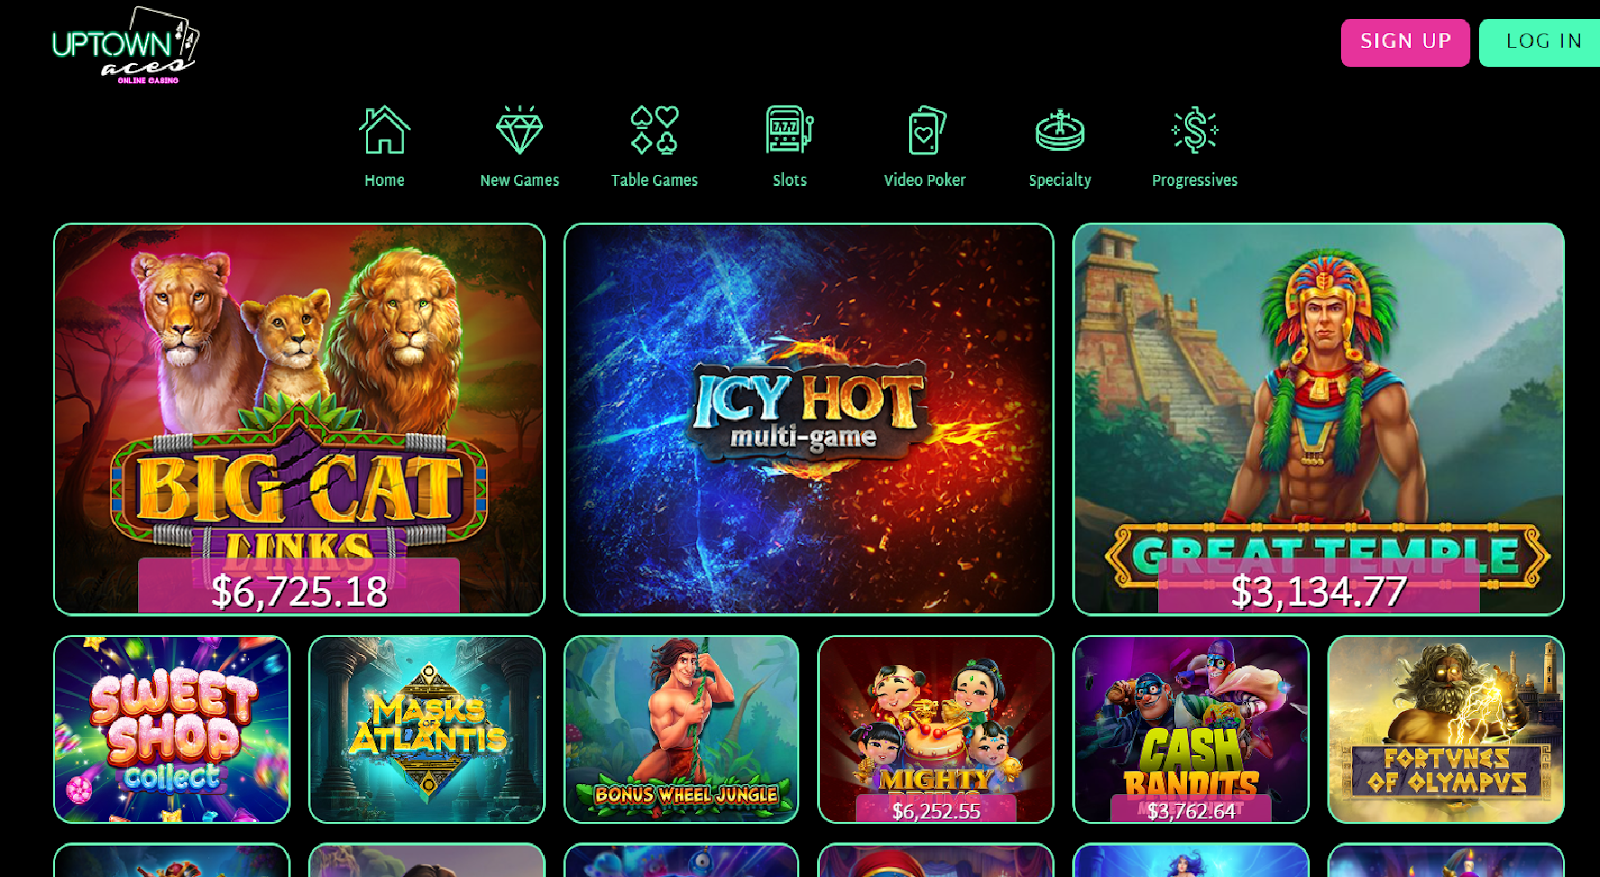 Online slot games provider